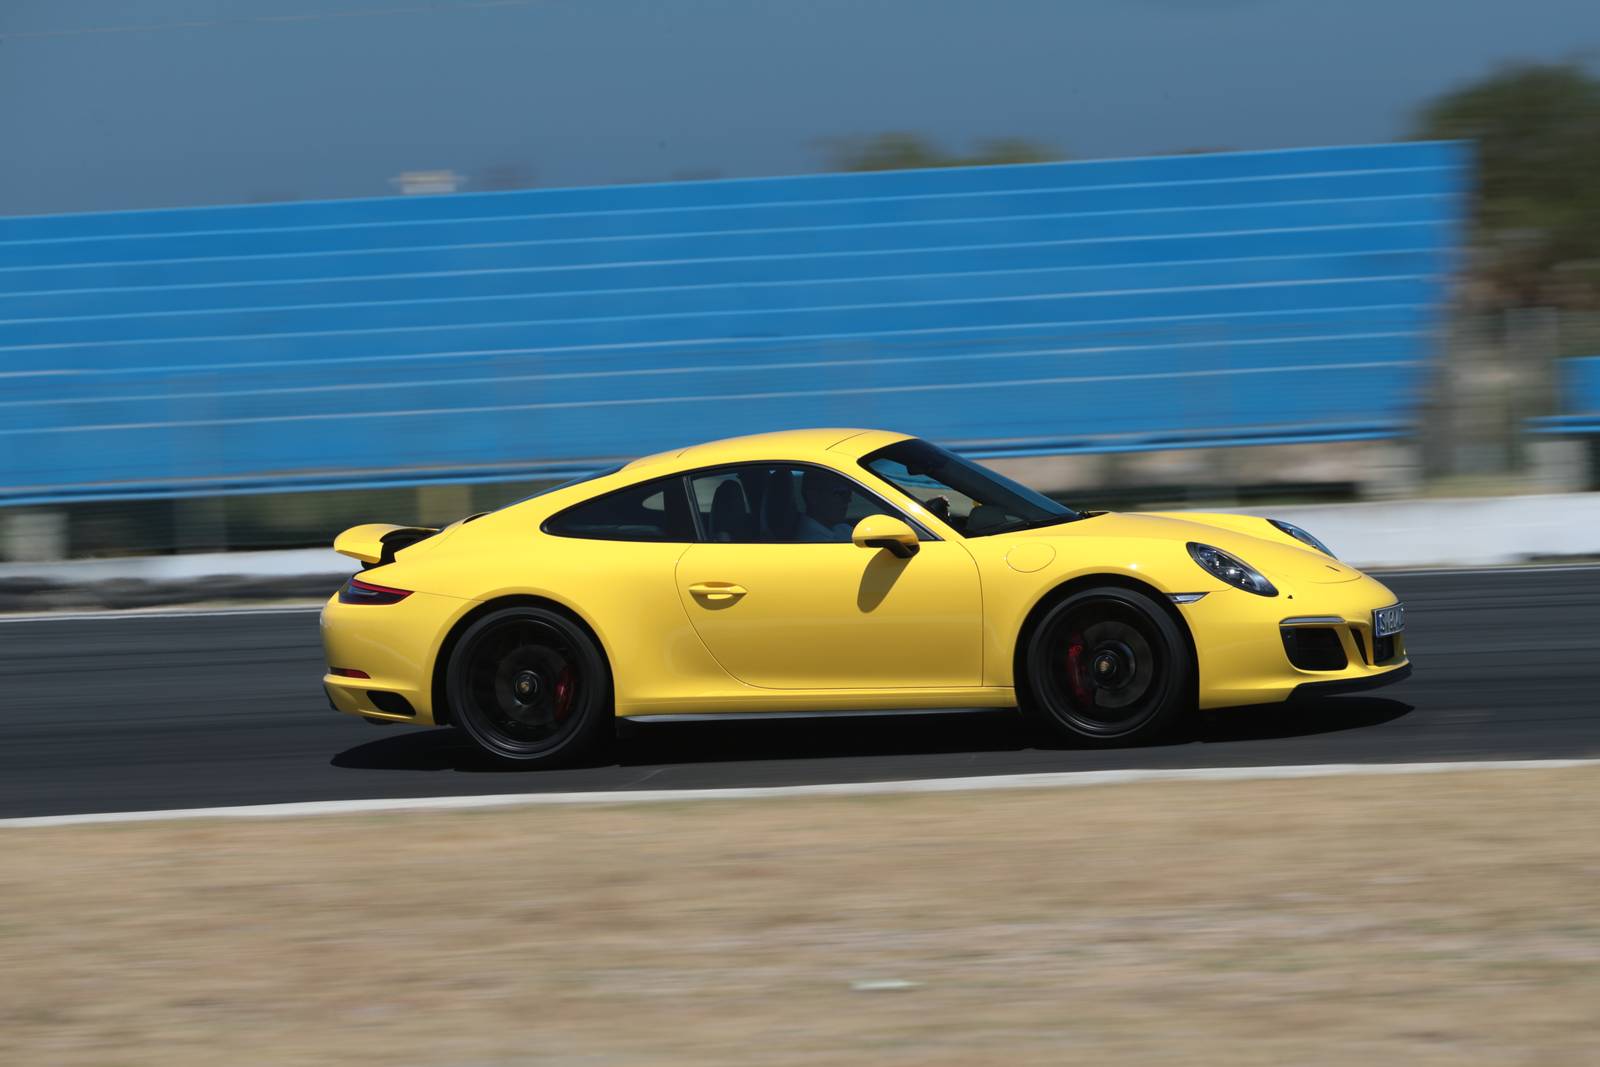 2017 Porsche 911 GTS Faster than 991.1 GT3 at Nurburgring